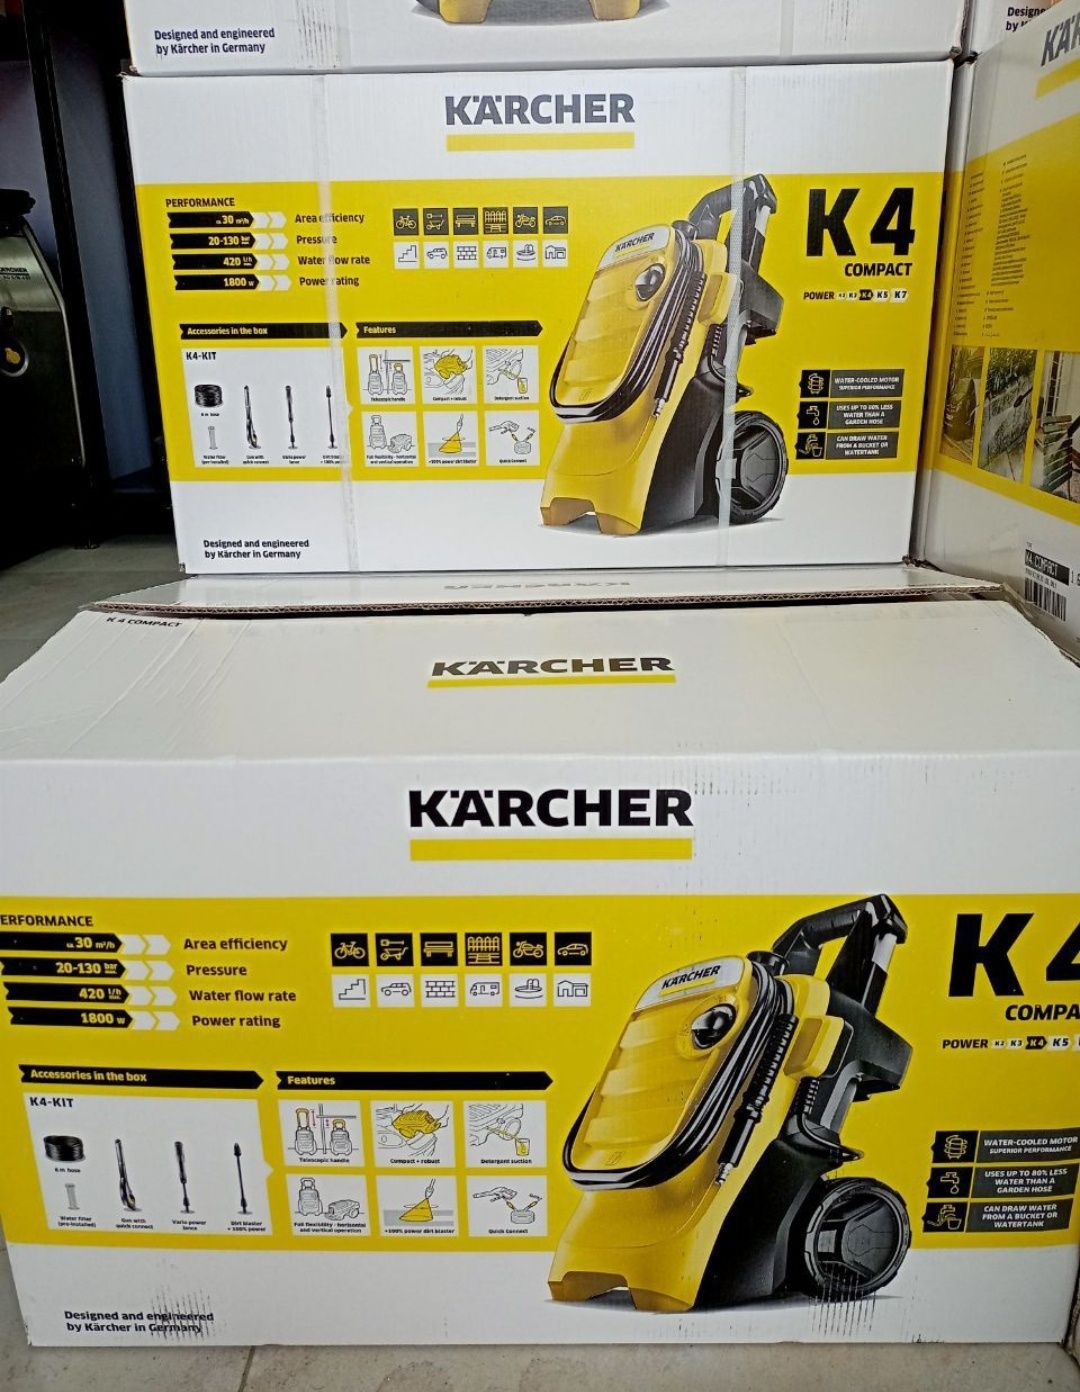 Karcher in Germany original! K4 compact.